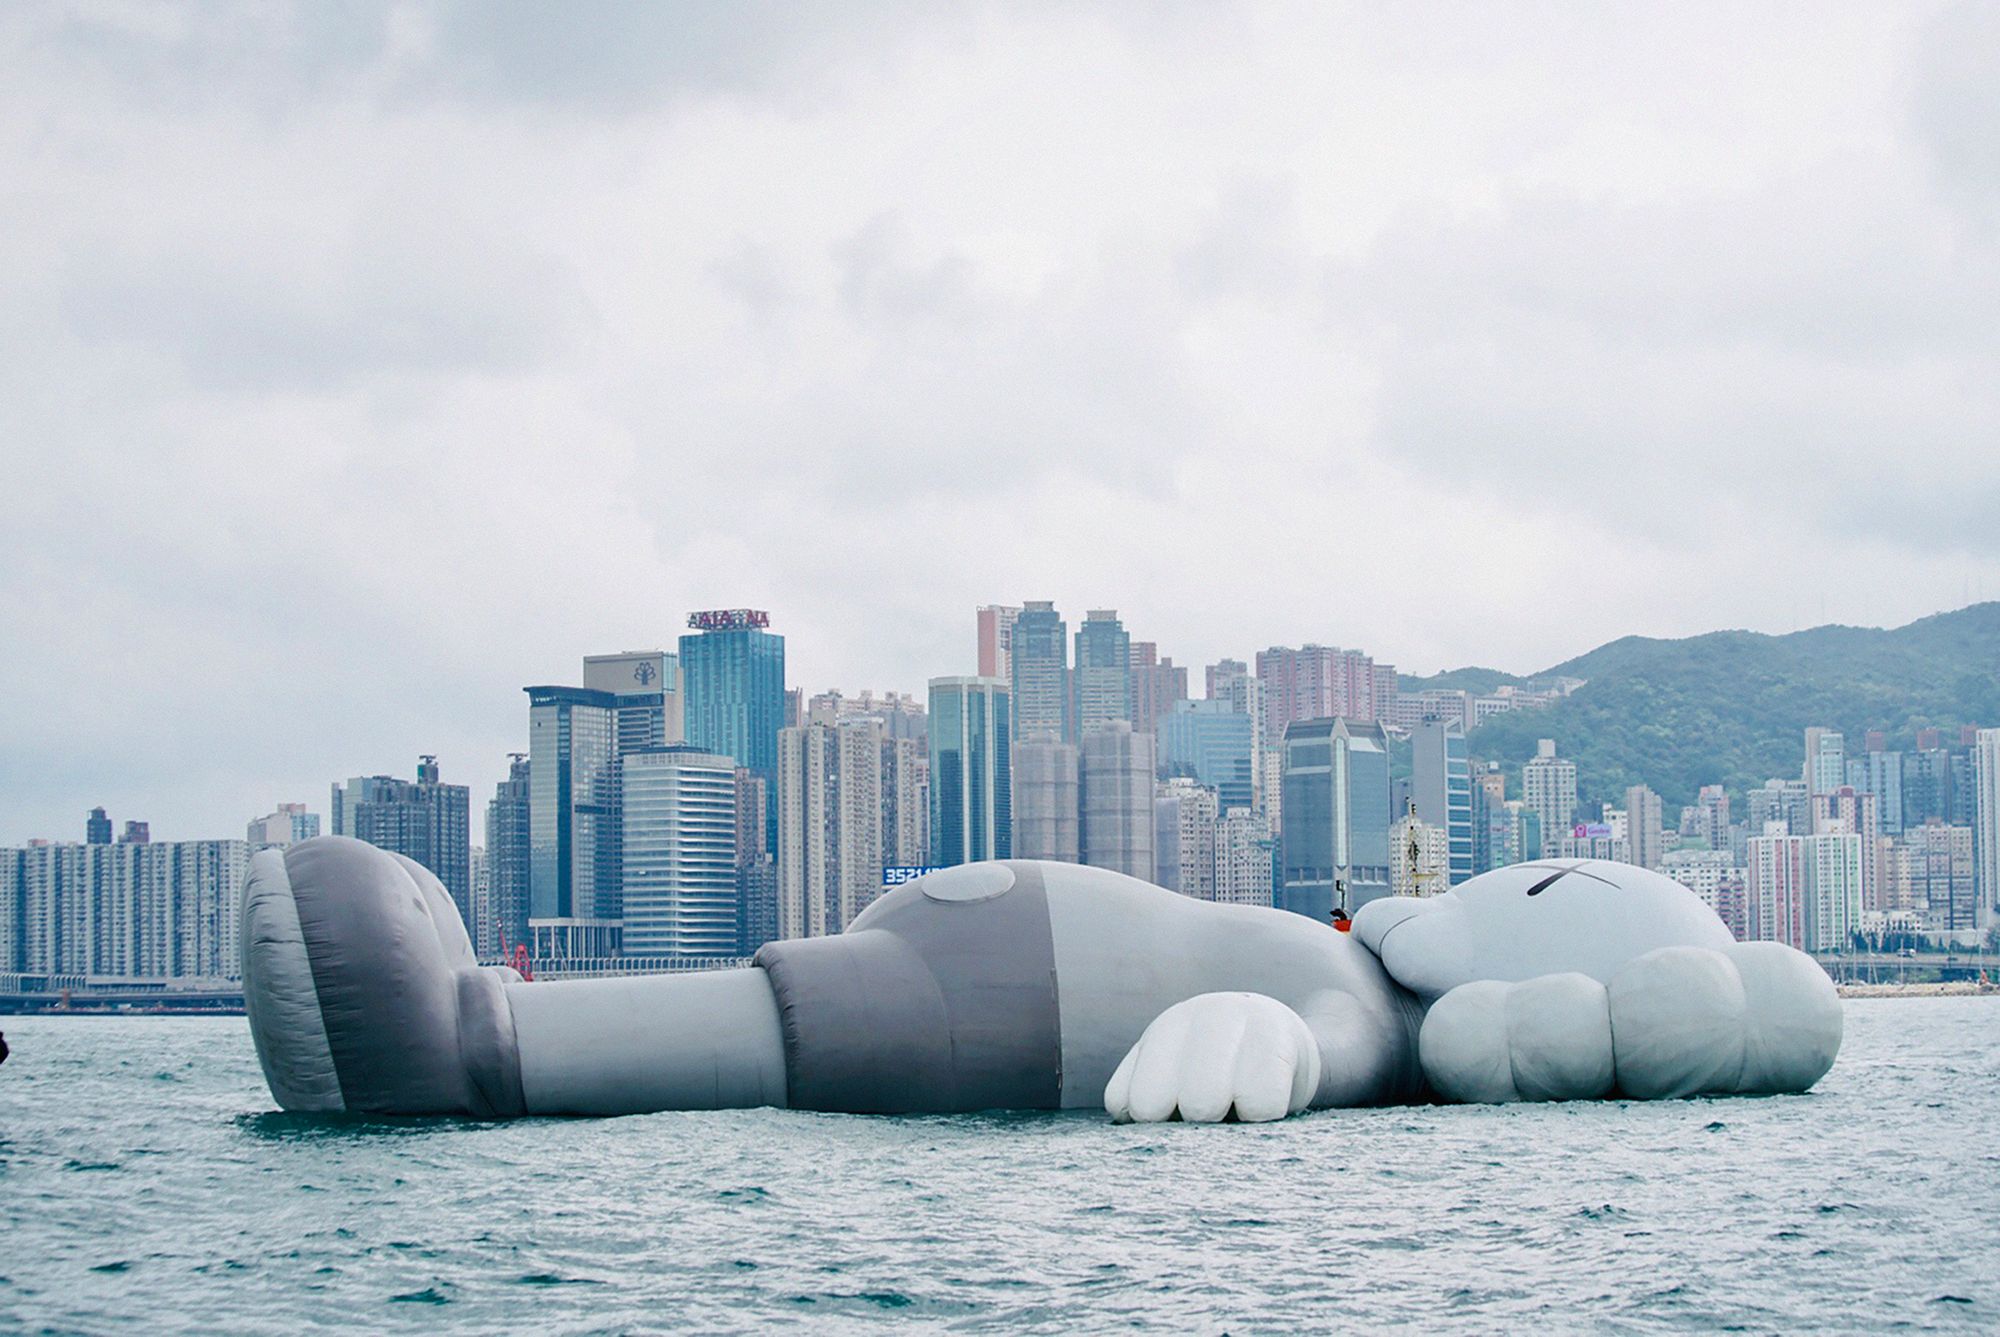 KAWS célèbre: street artist's first survey—and huge inflatable